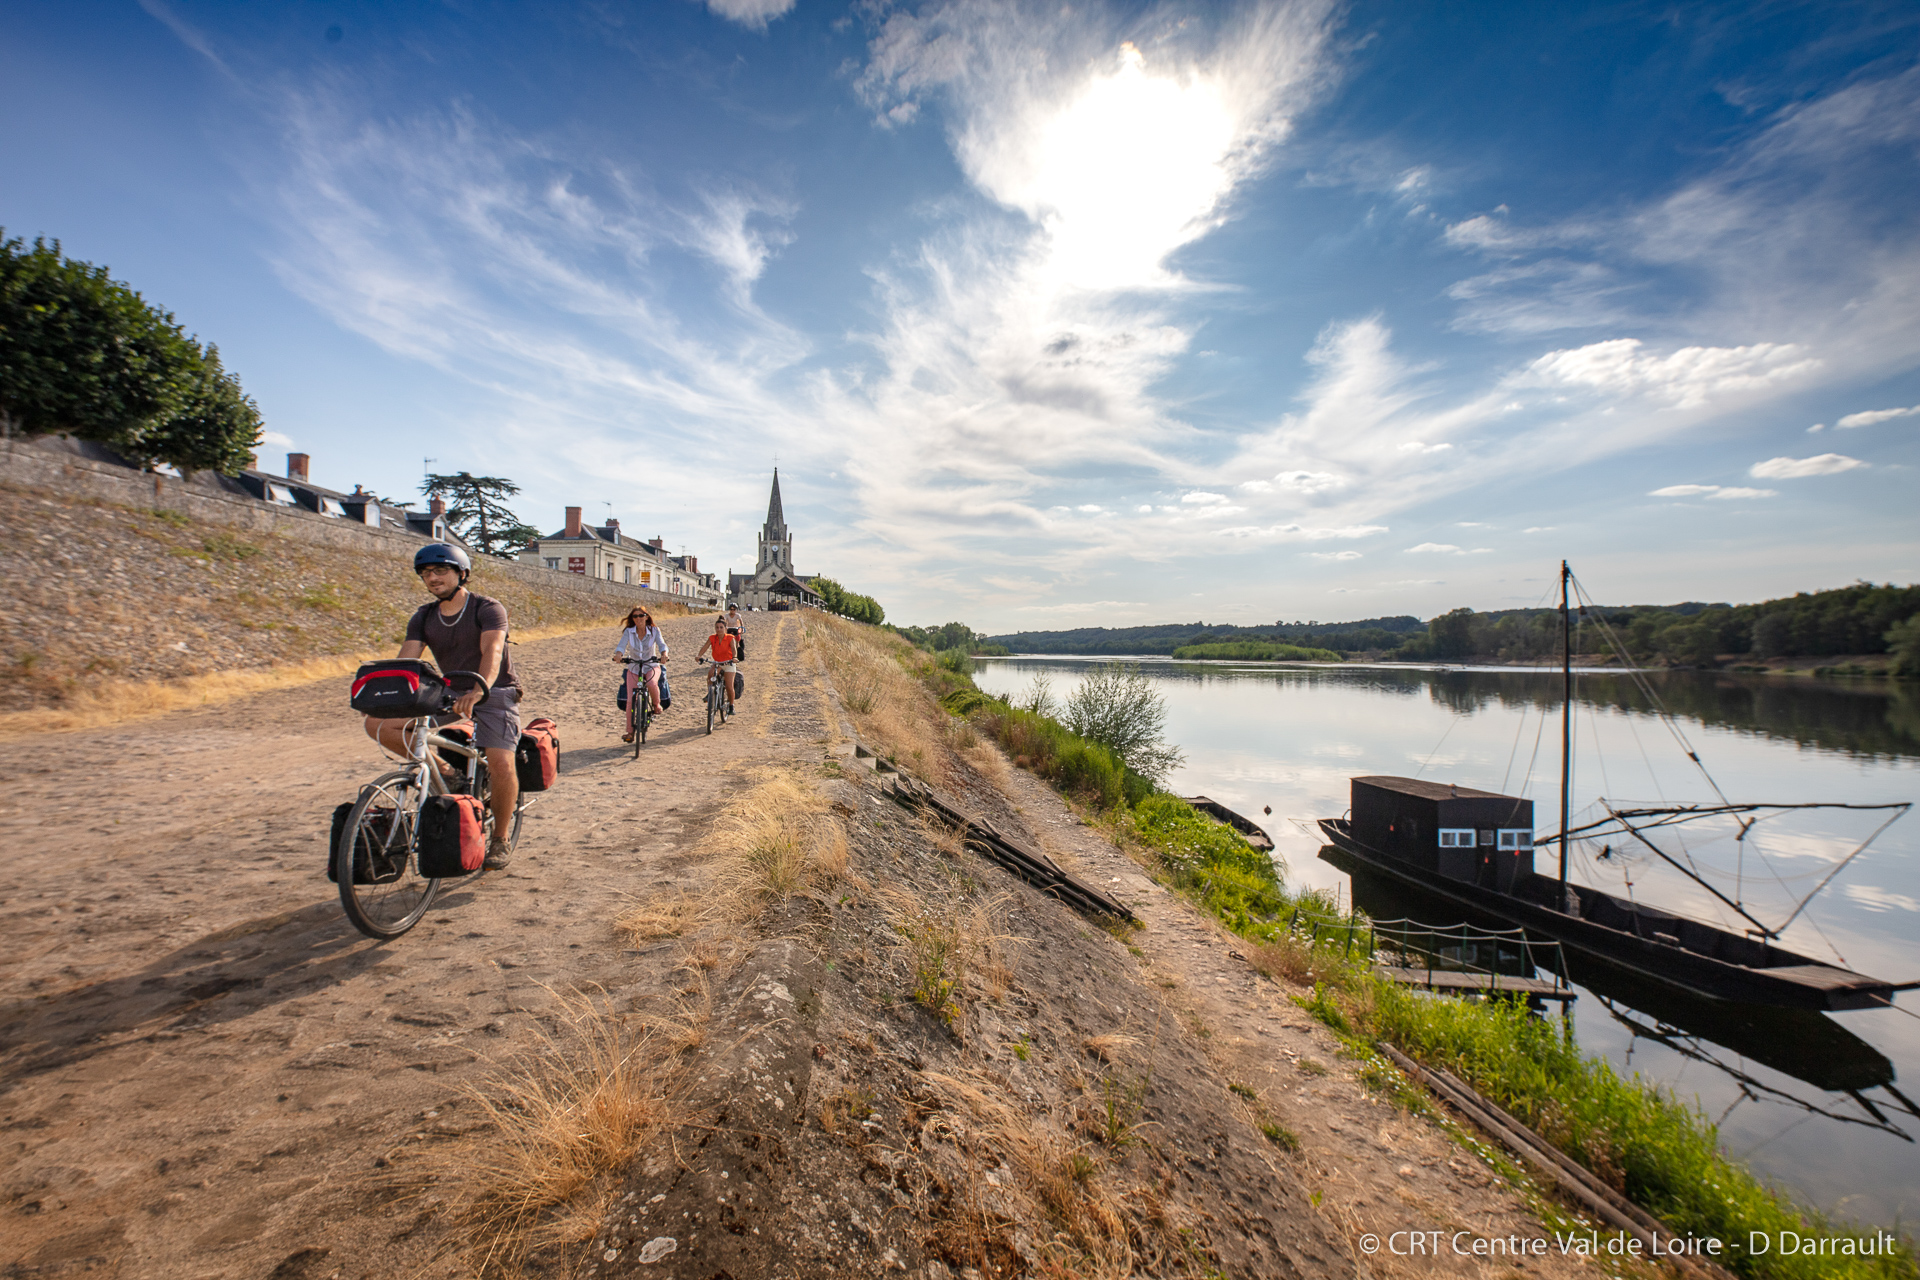 Bike ride near the Loire River